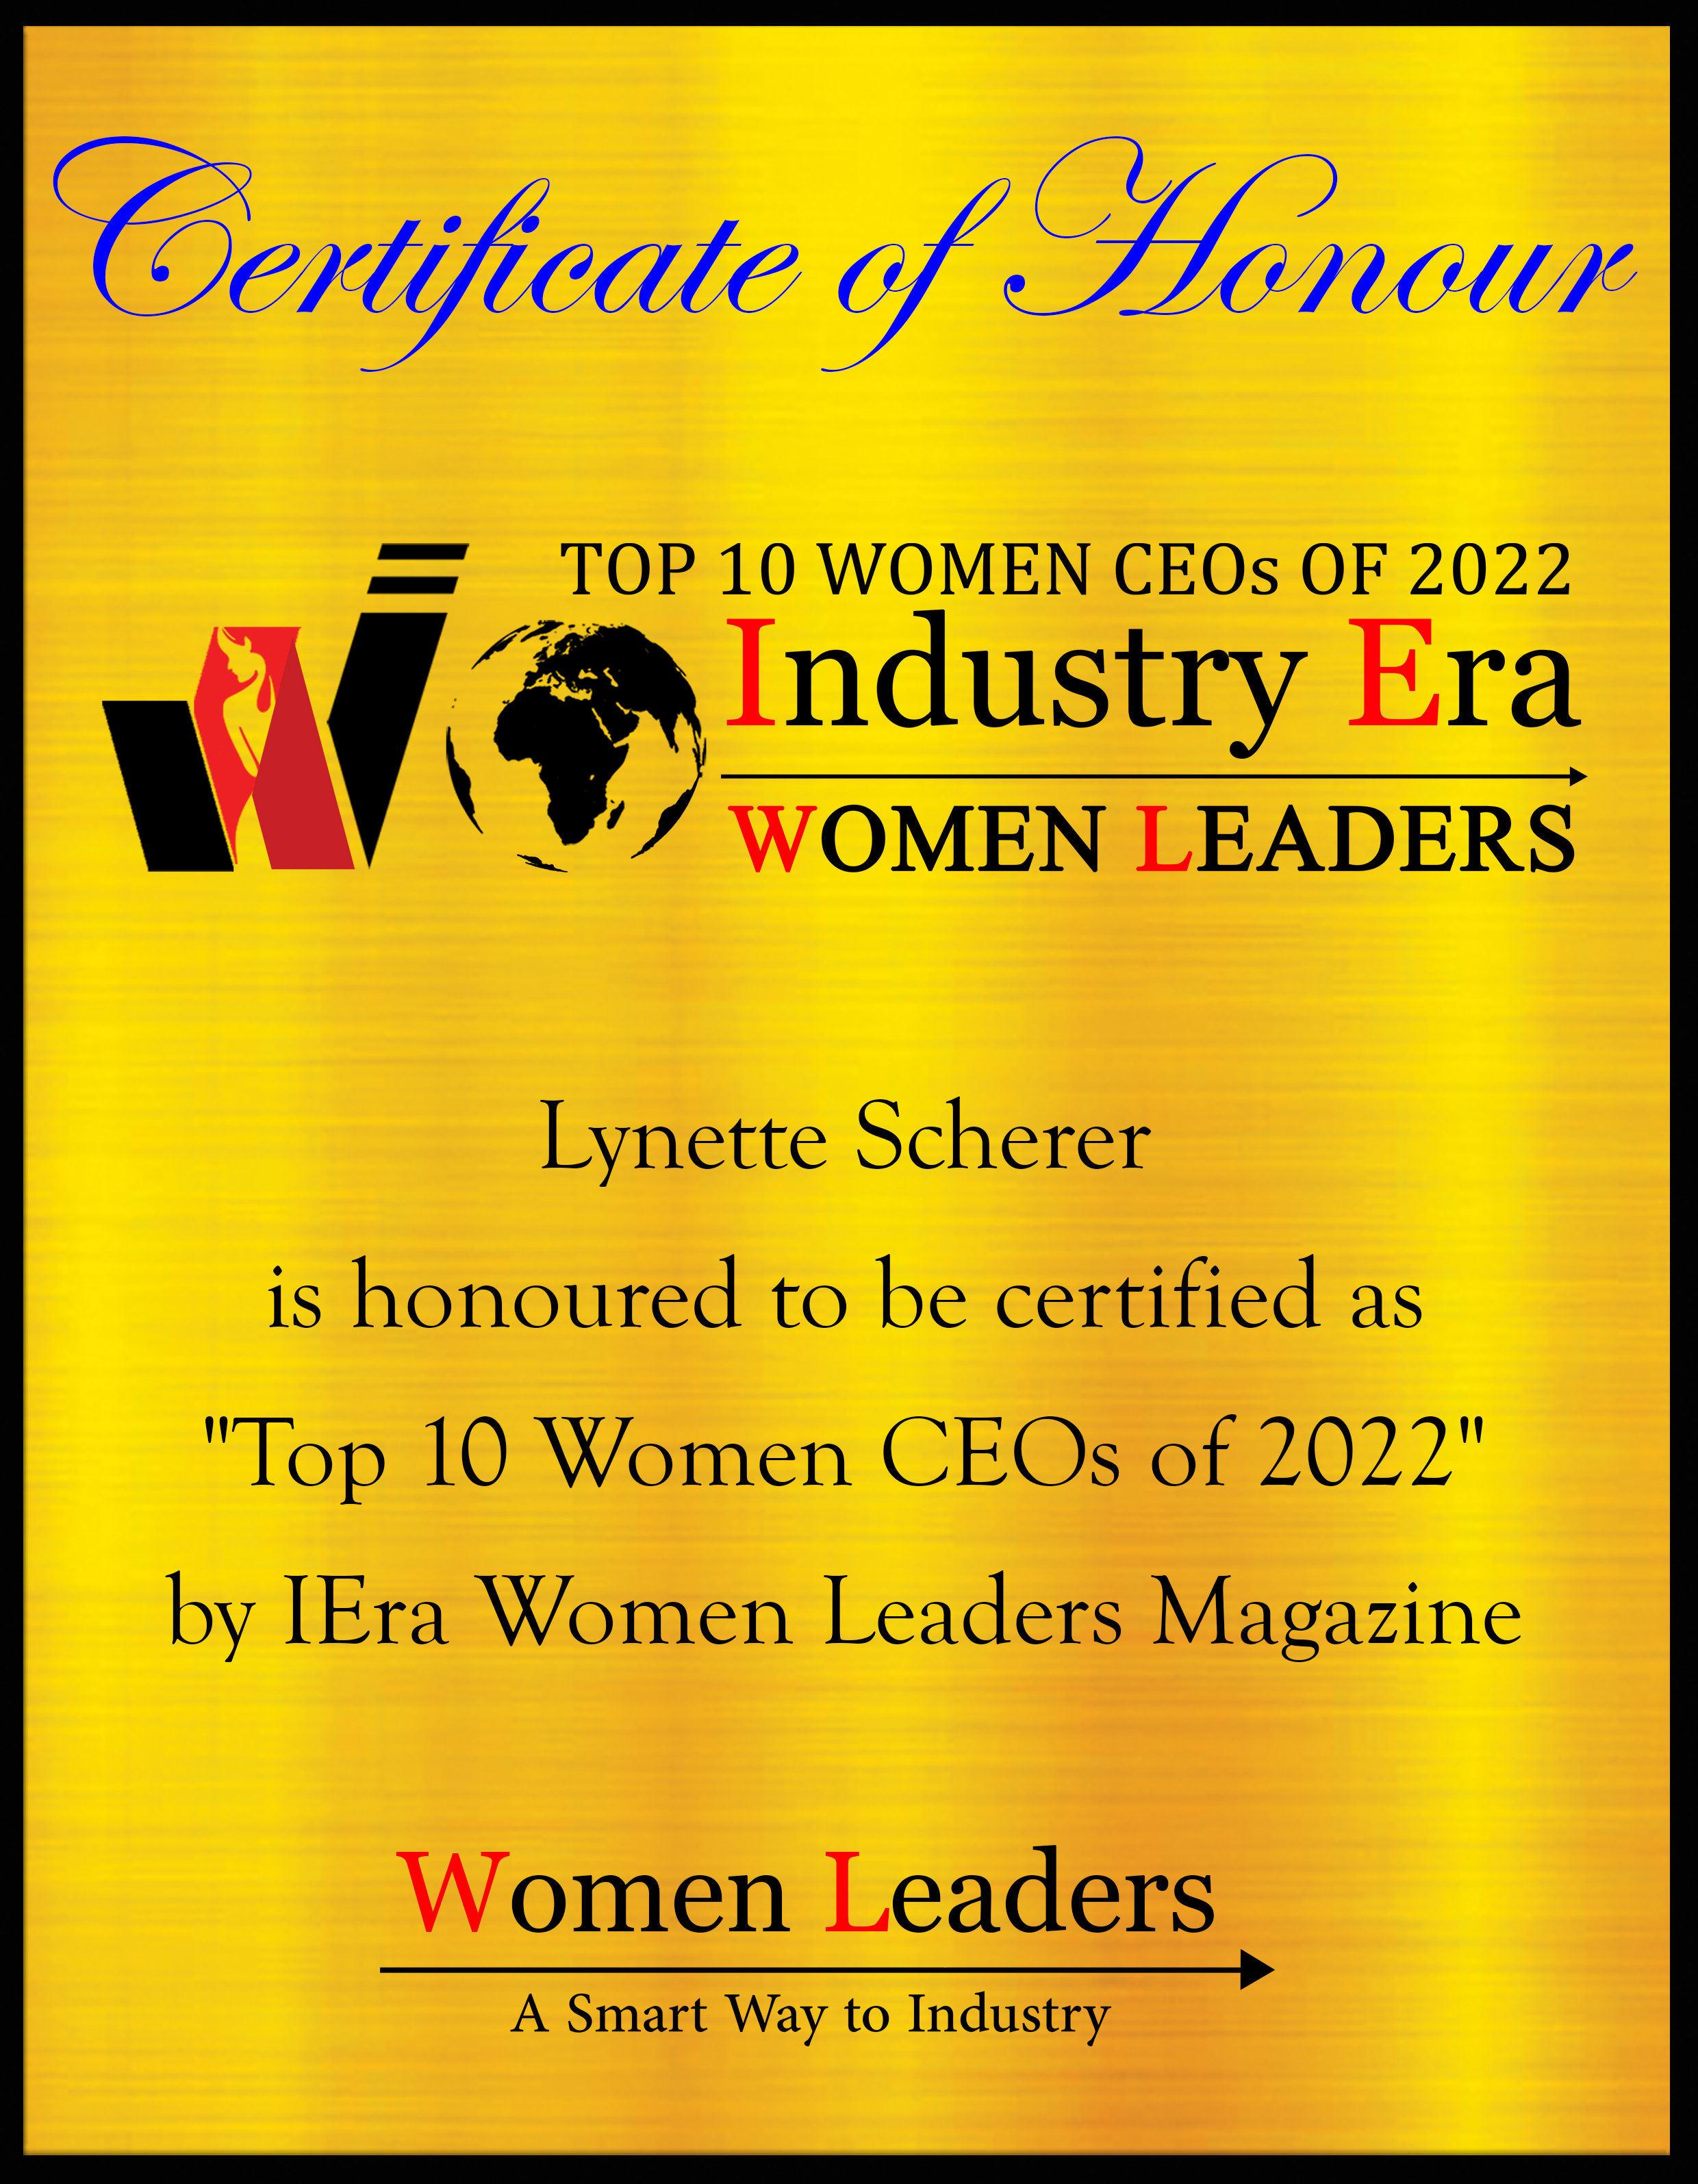 Lynette Scherer, MD & CEO of SAMGI, Top 10 Women CEOs of 2022